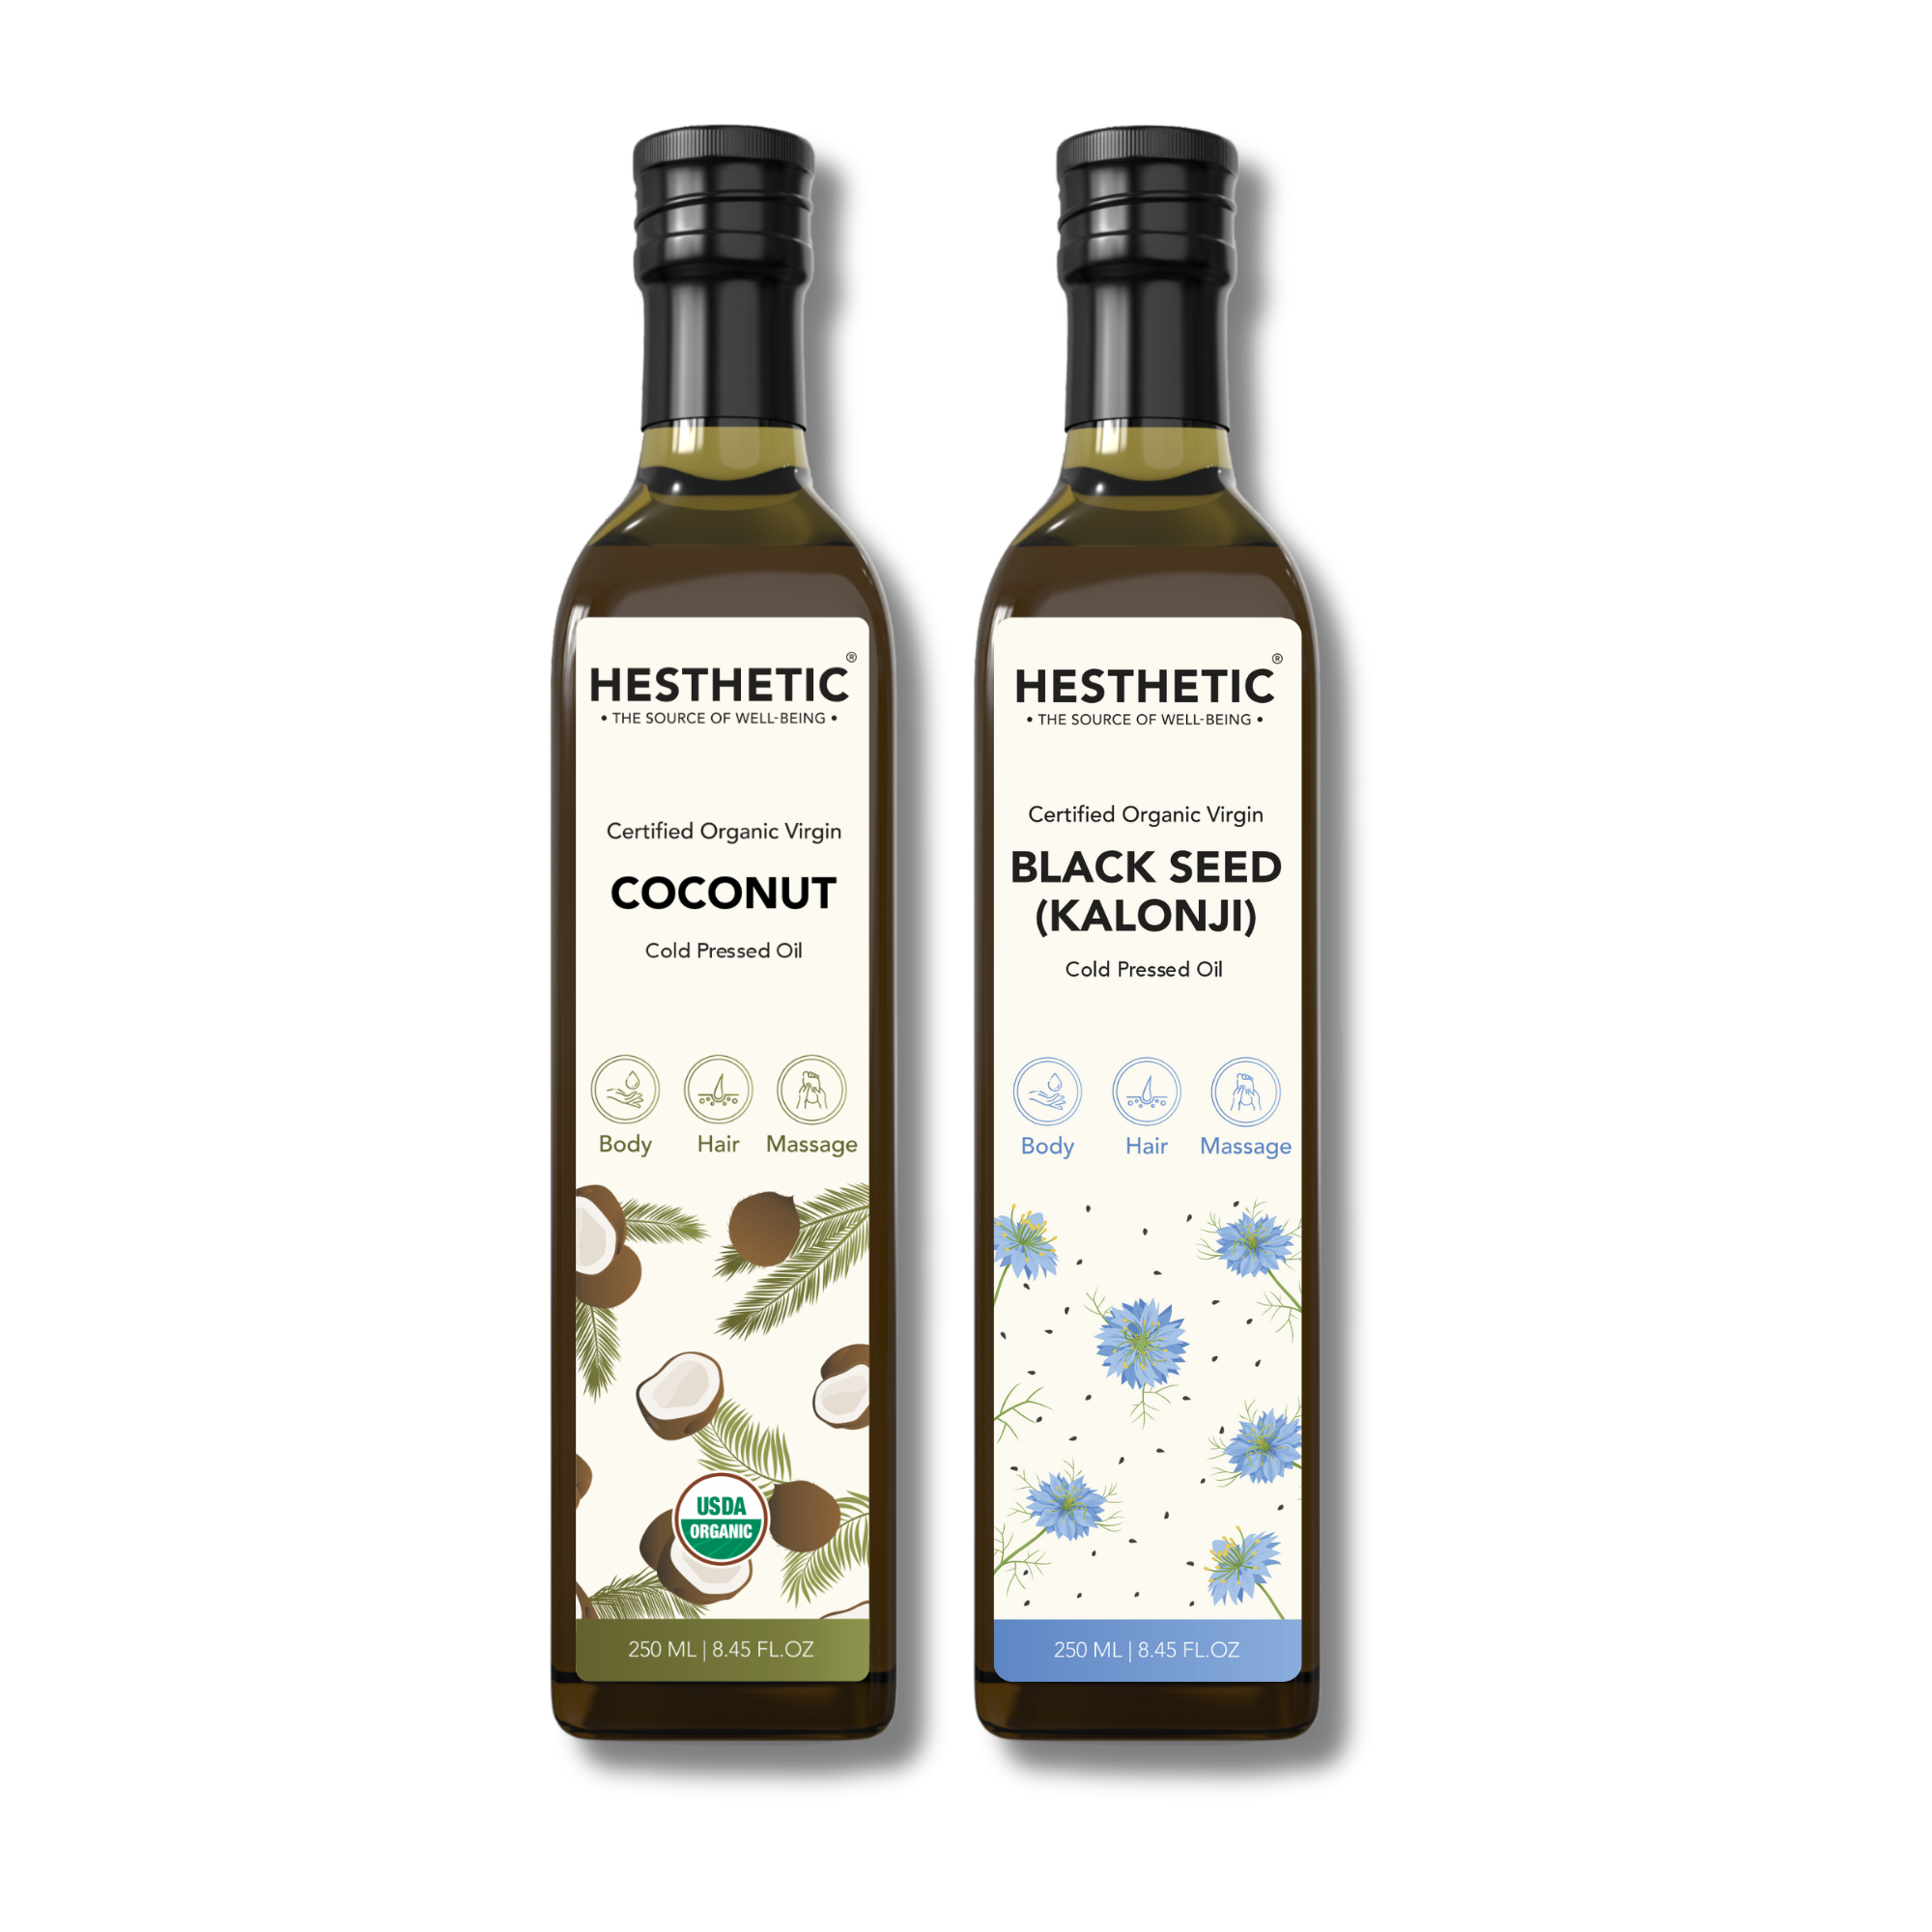 HESTHETIC Hair Care Combo - Coconut Oil & Black Cumin Seed (Kalonji) Oil